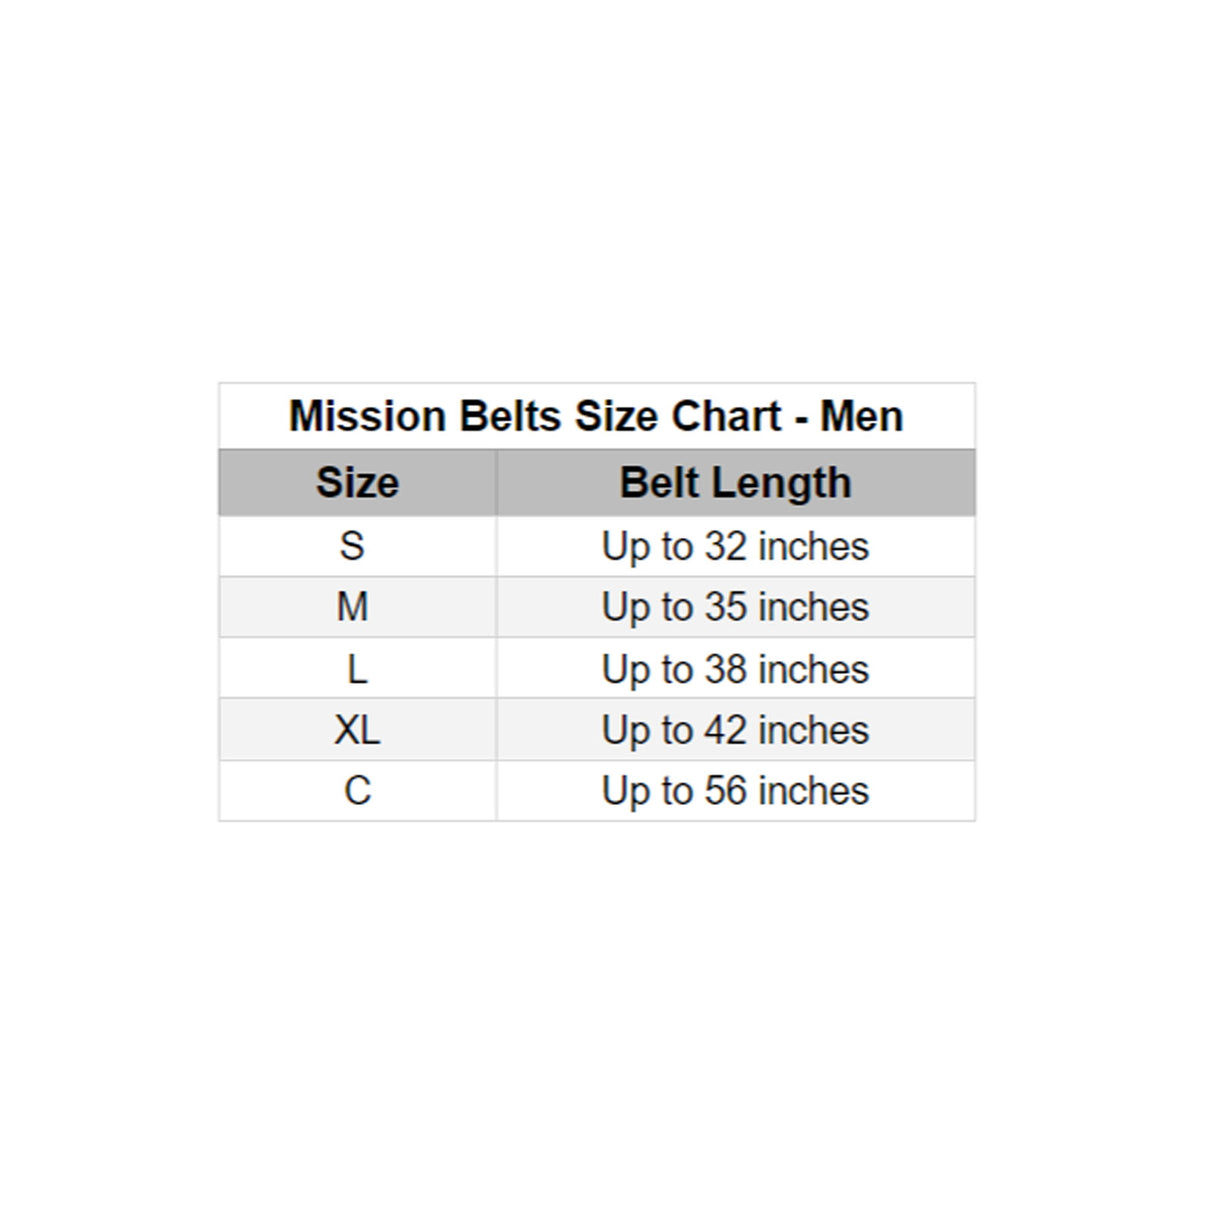 Mission Belts Commando Belt (Men) - Swat Black/Camo Nylon Accessories - Belts - Non-Leather - The Heel Shoe Fitters